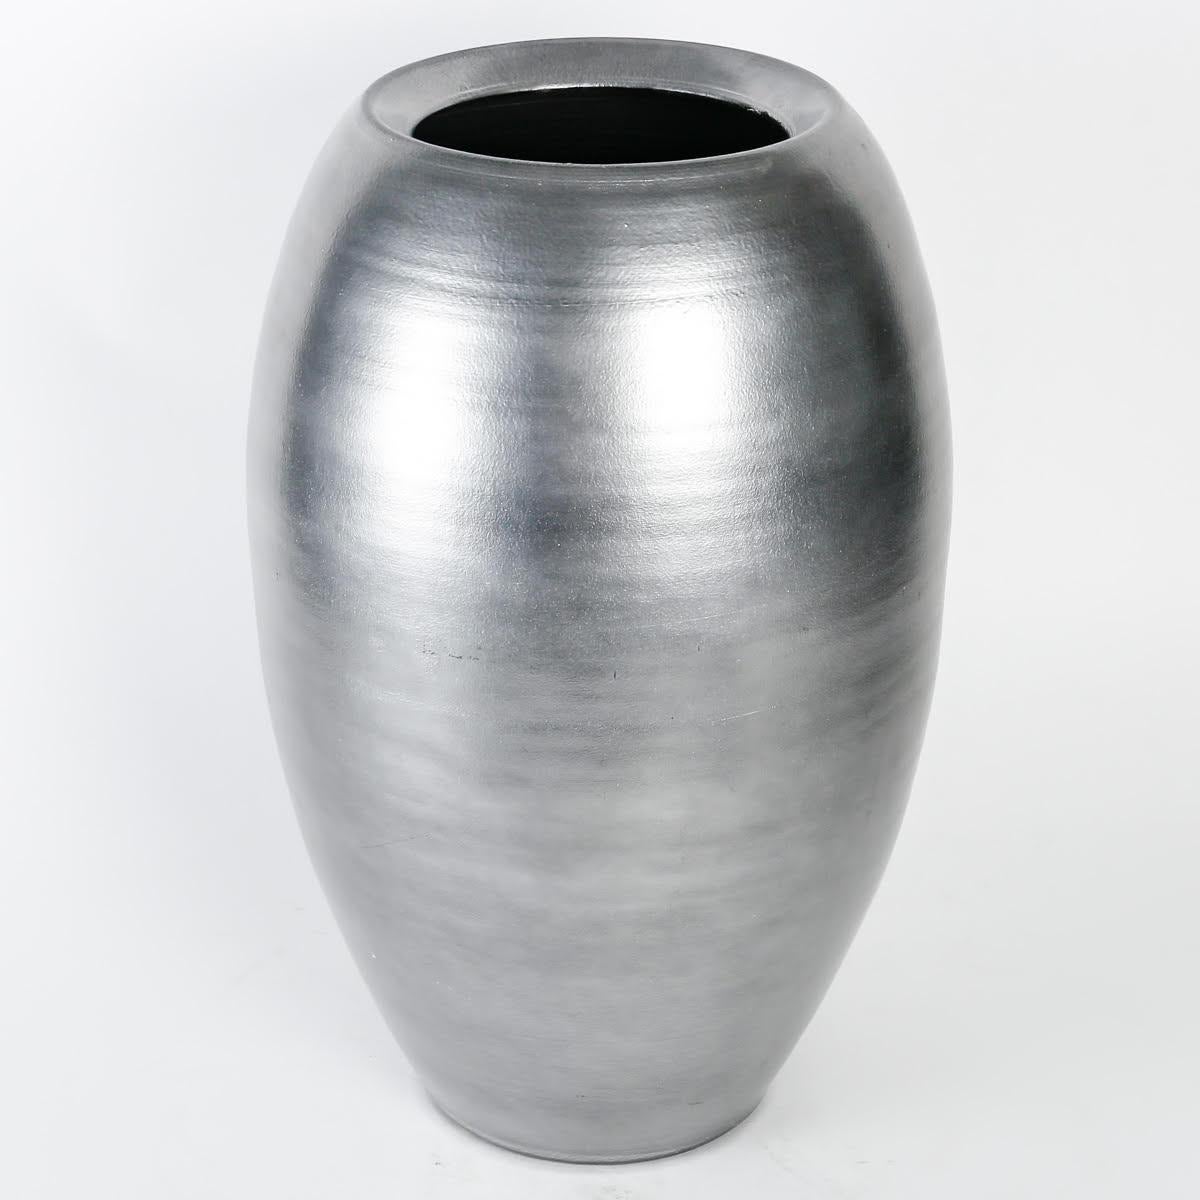 Large Silvered Terracotta Vase

Twentieth century silver-plated terracotta vase.

Dimensions: h: 46cm, d: 27cm